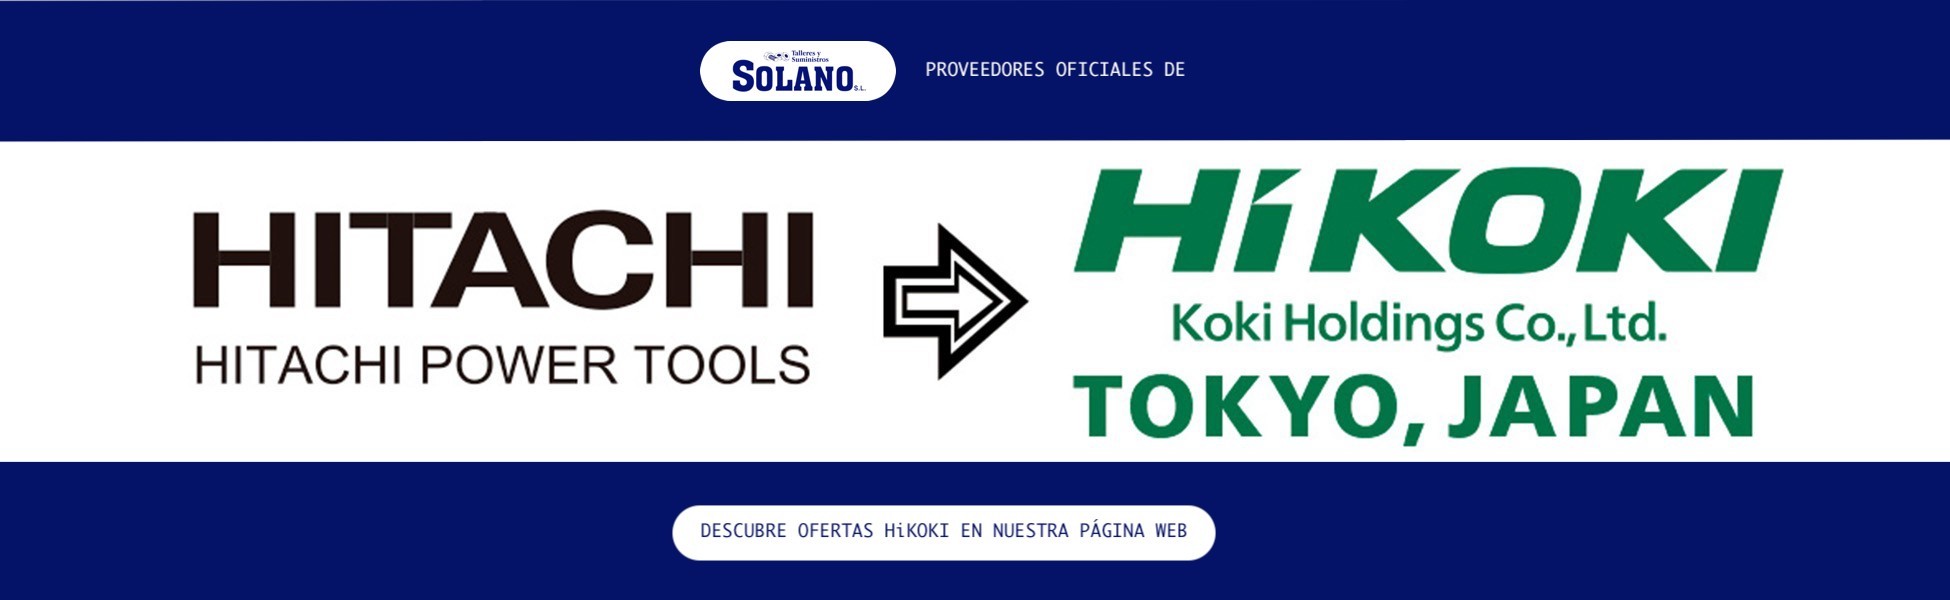 Servicio Oficial Hitachi-Hikoki